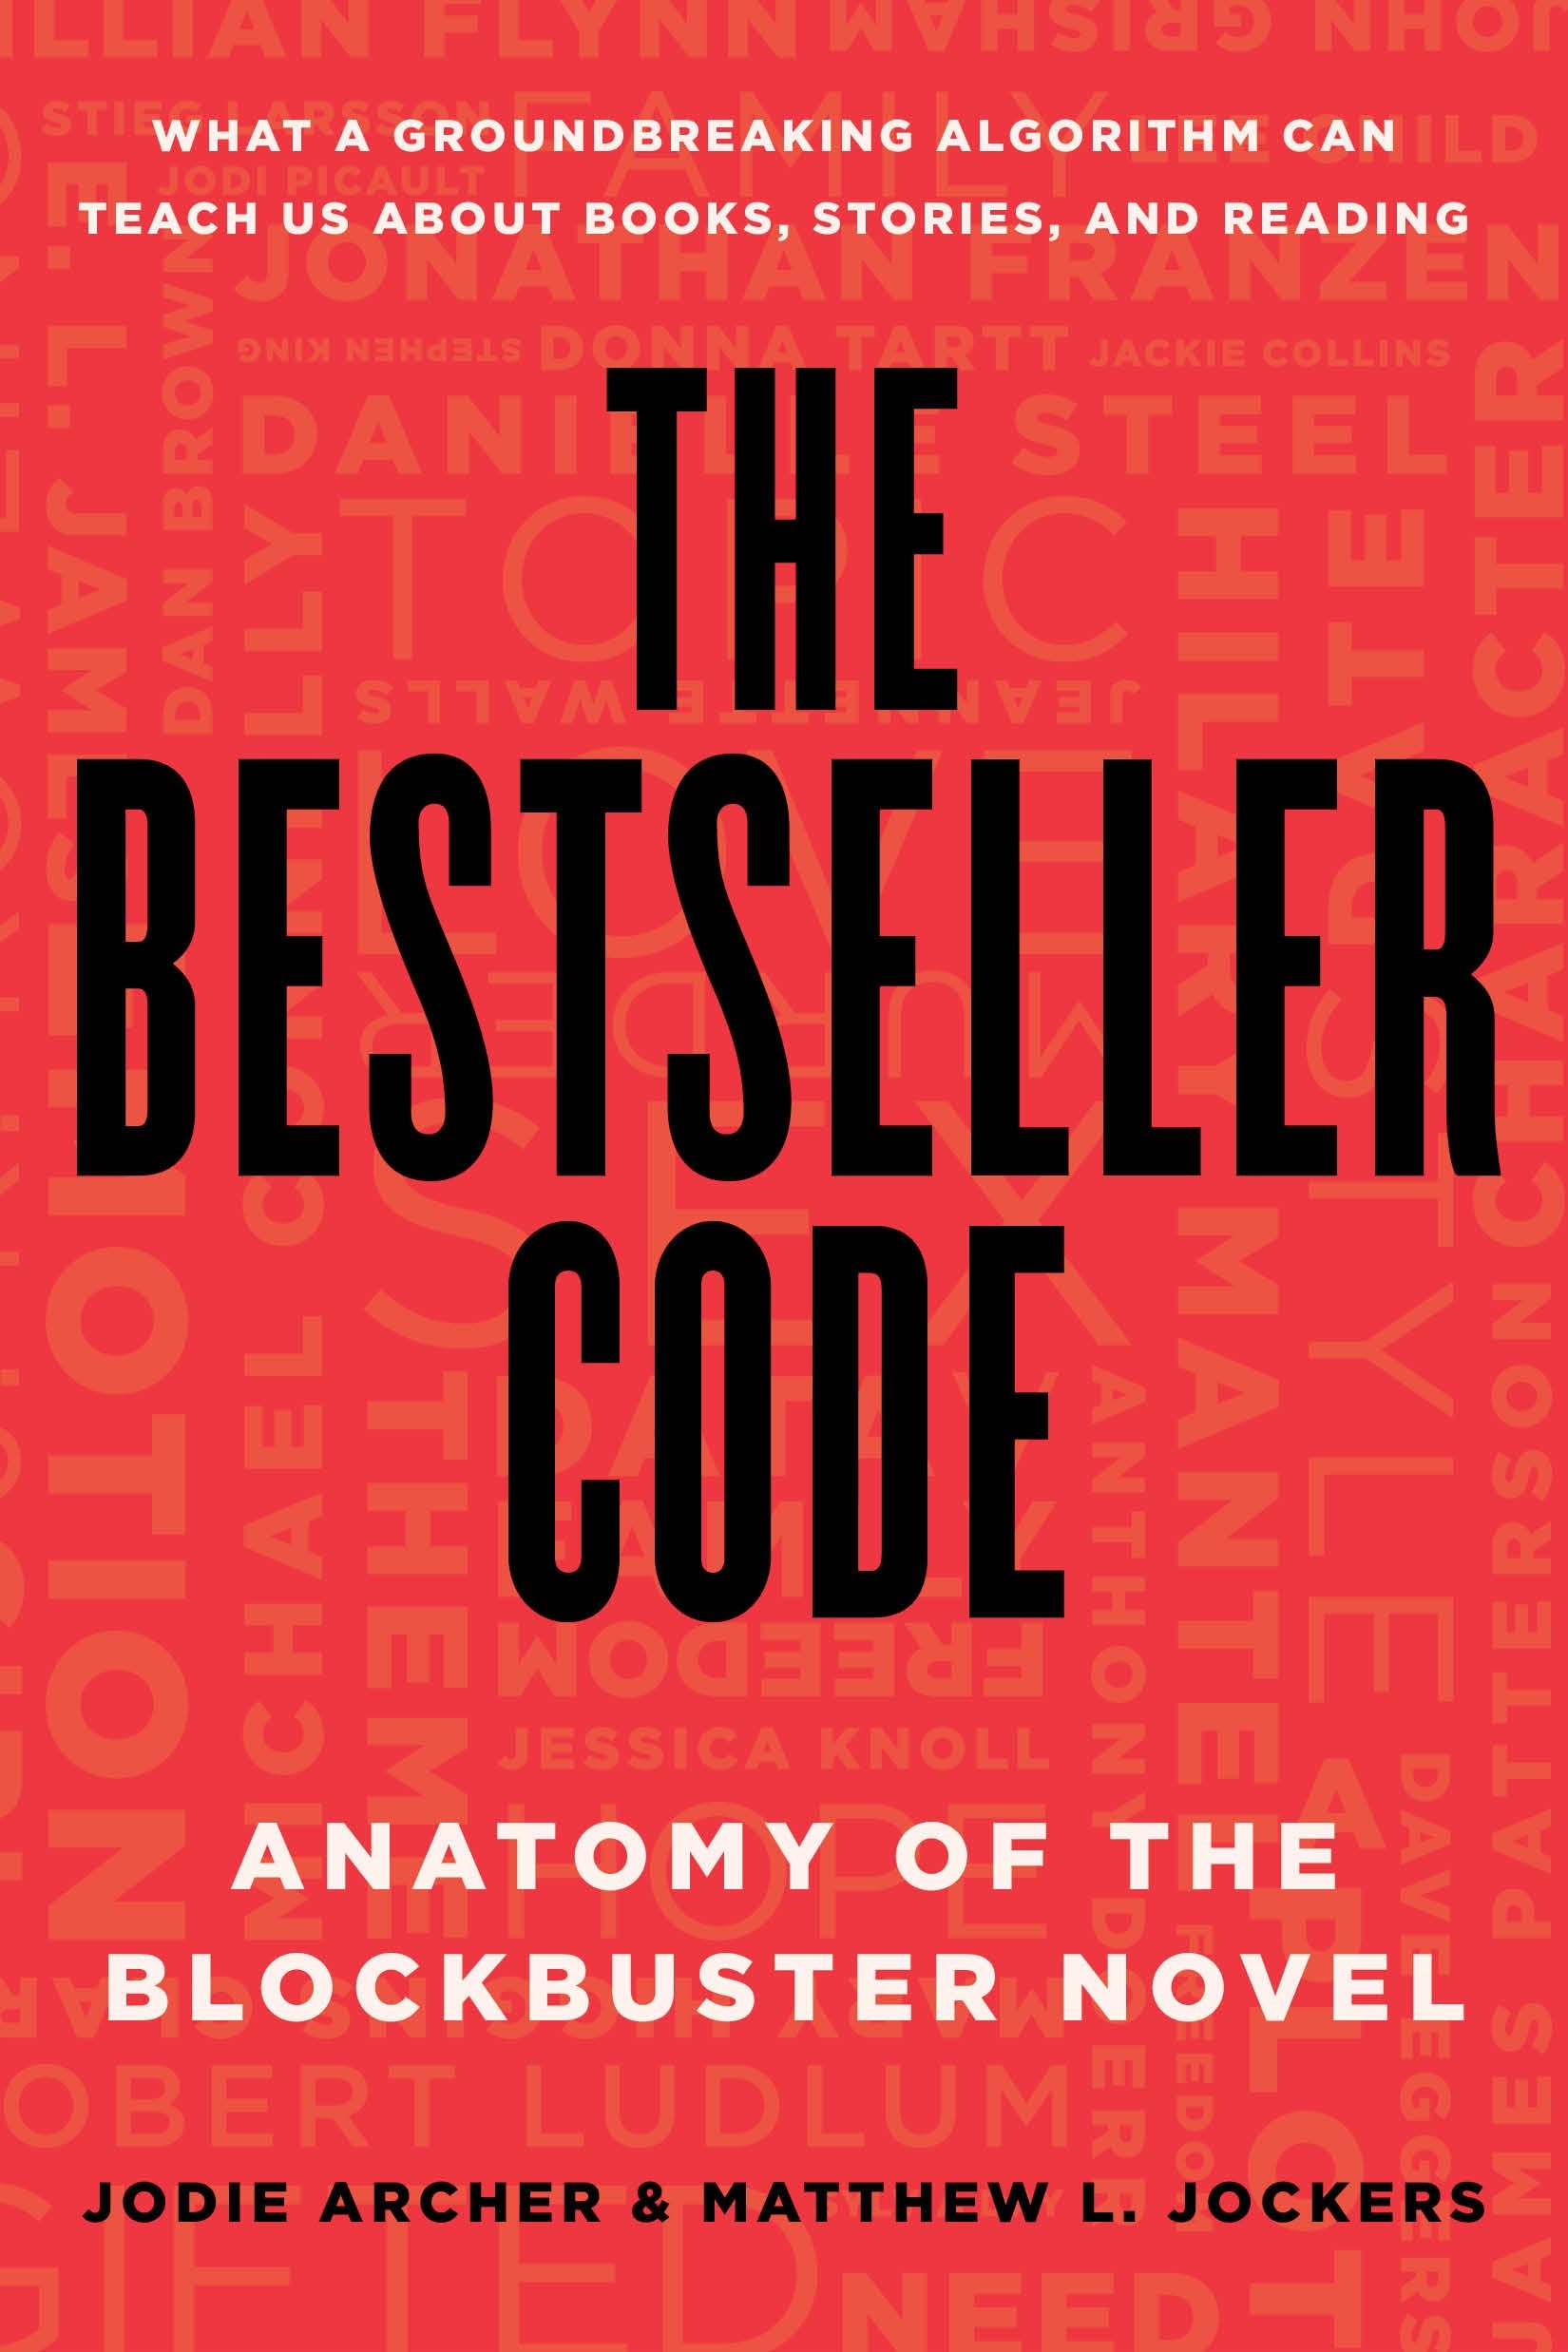 BestSeller Code 